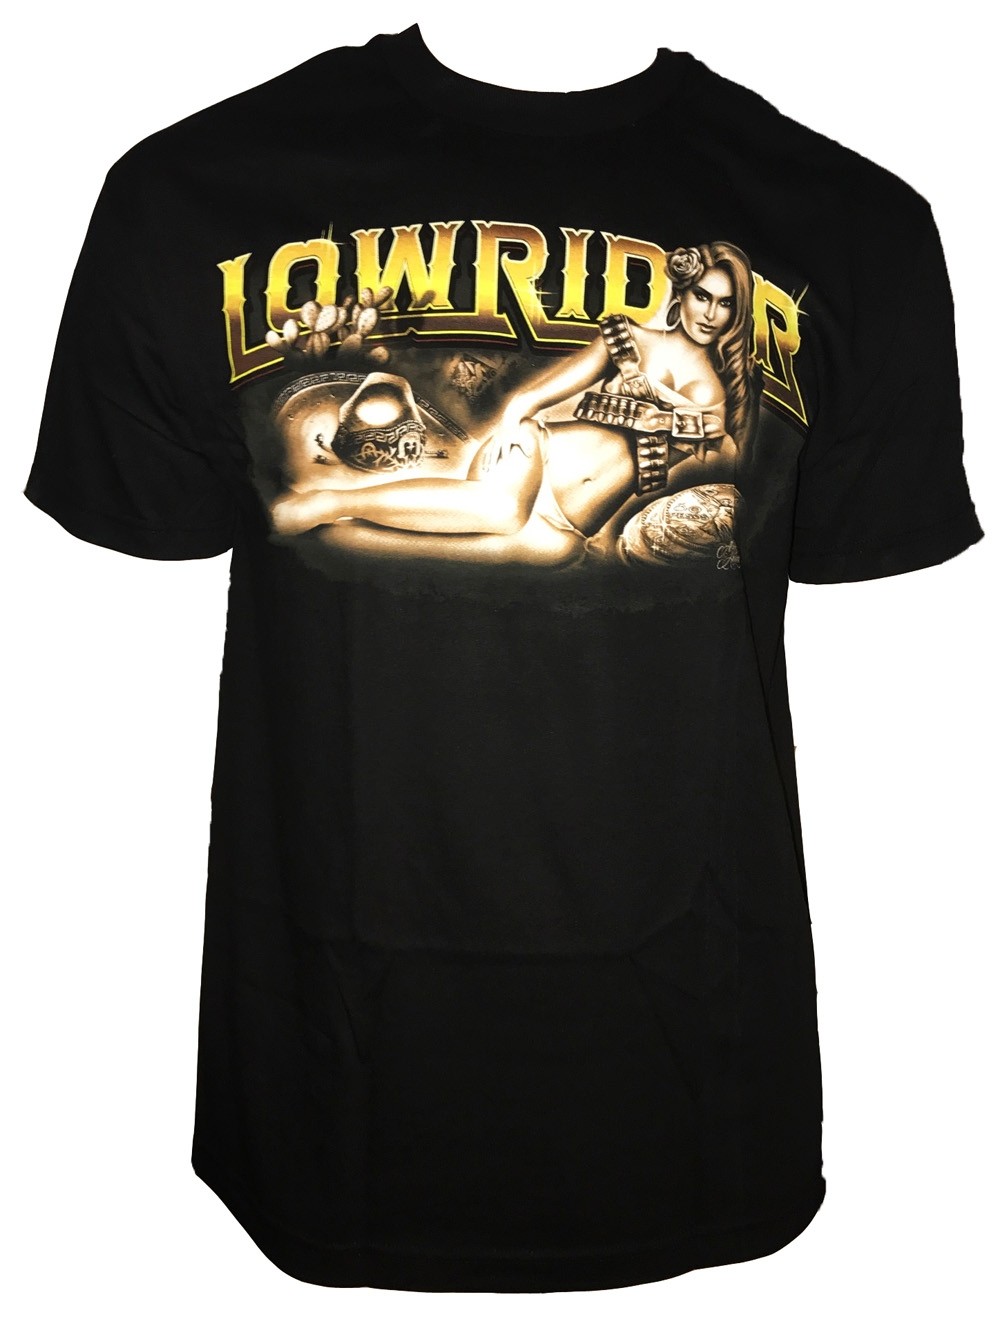 Lowrider Clothing - Lowrider Girlz T-Shirt